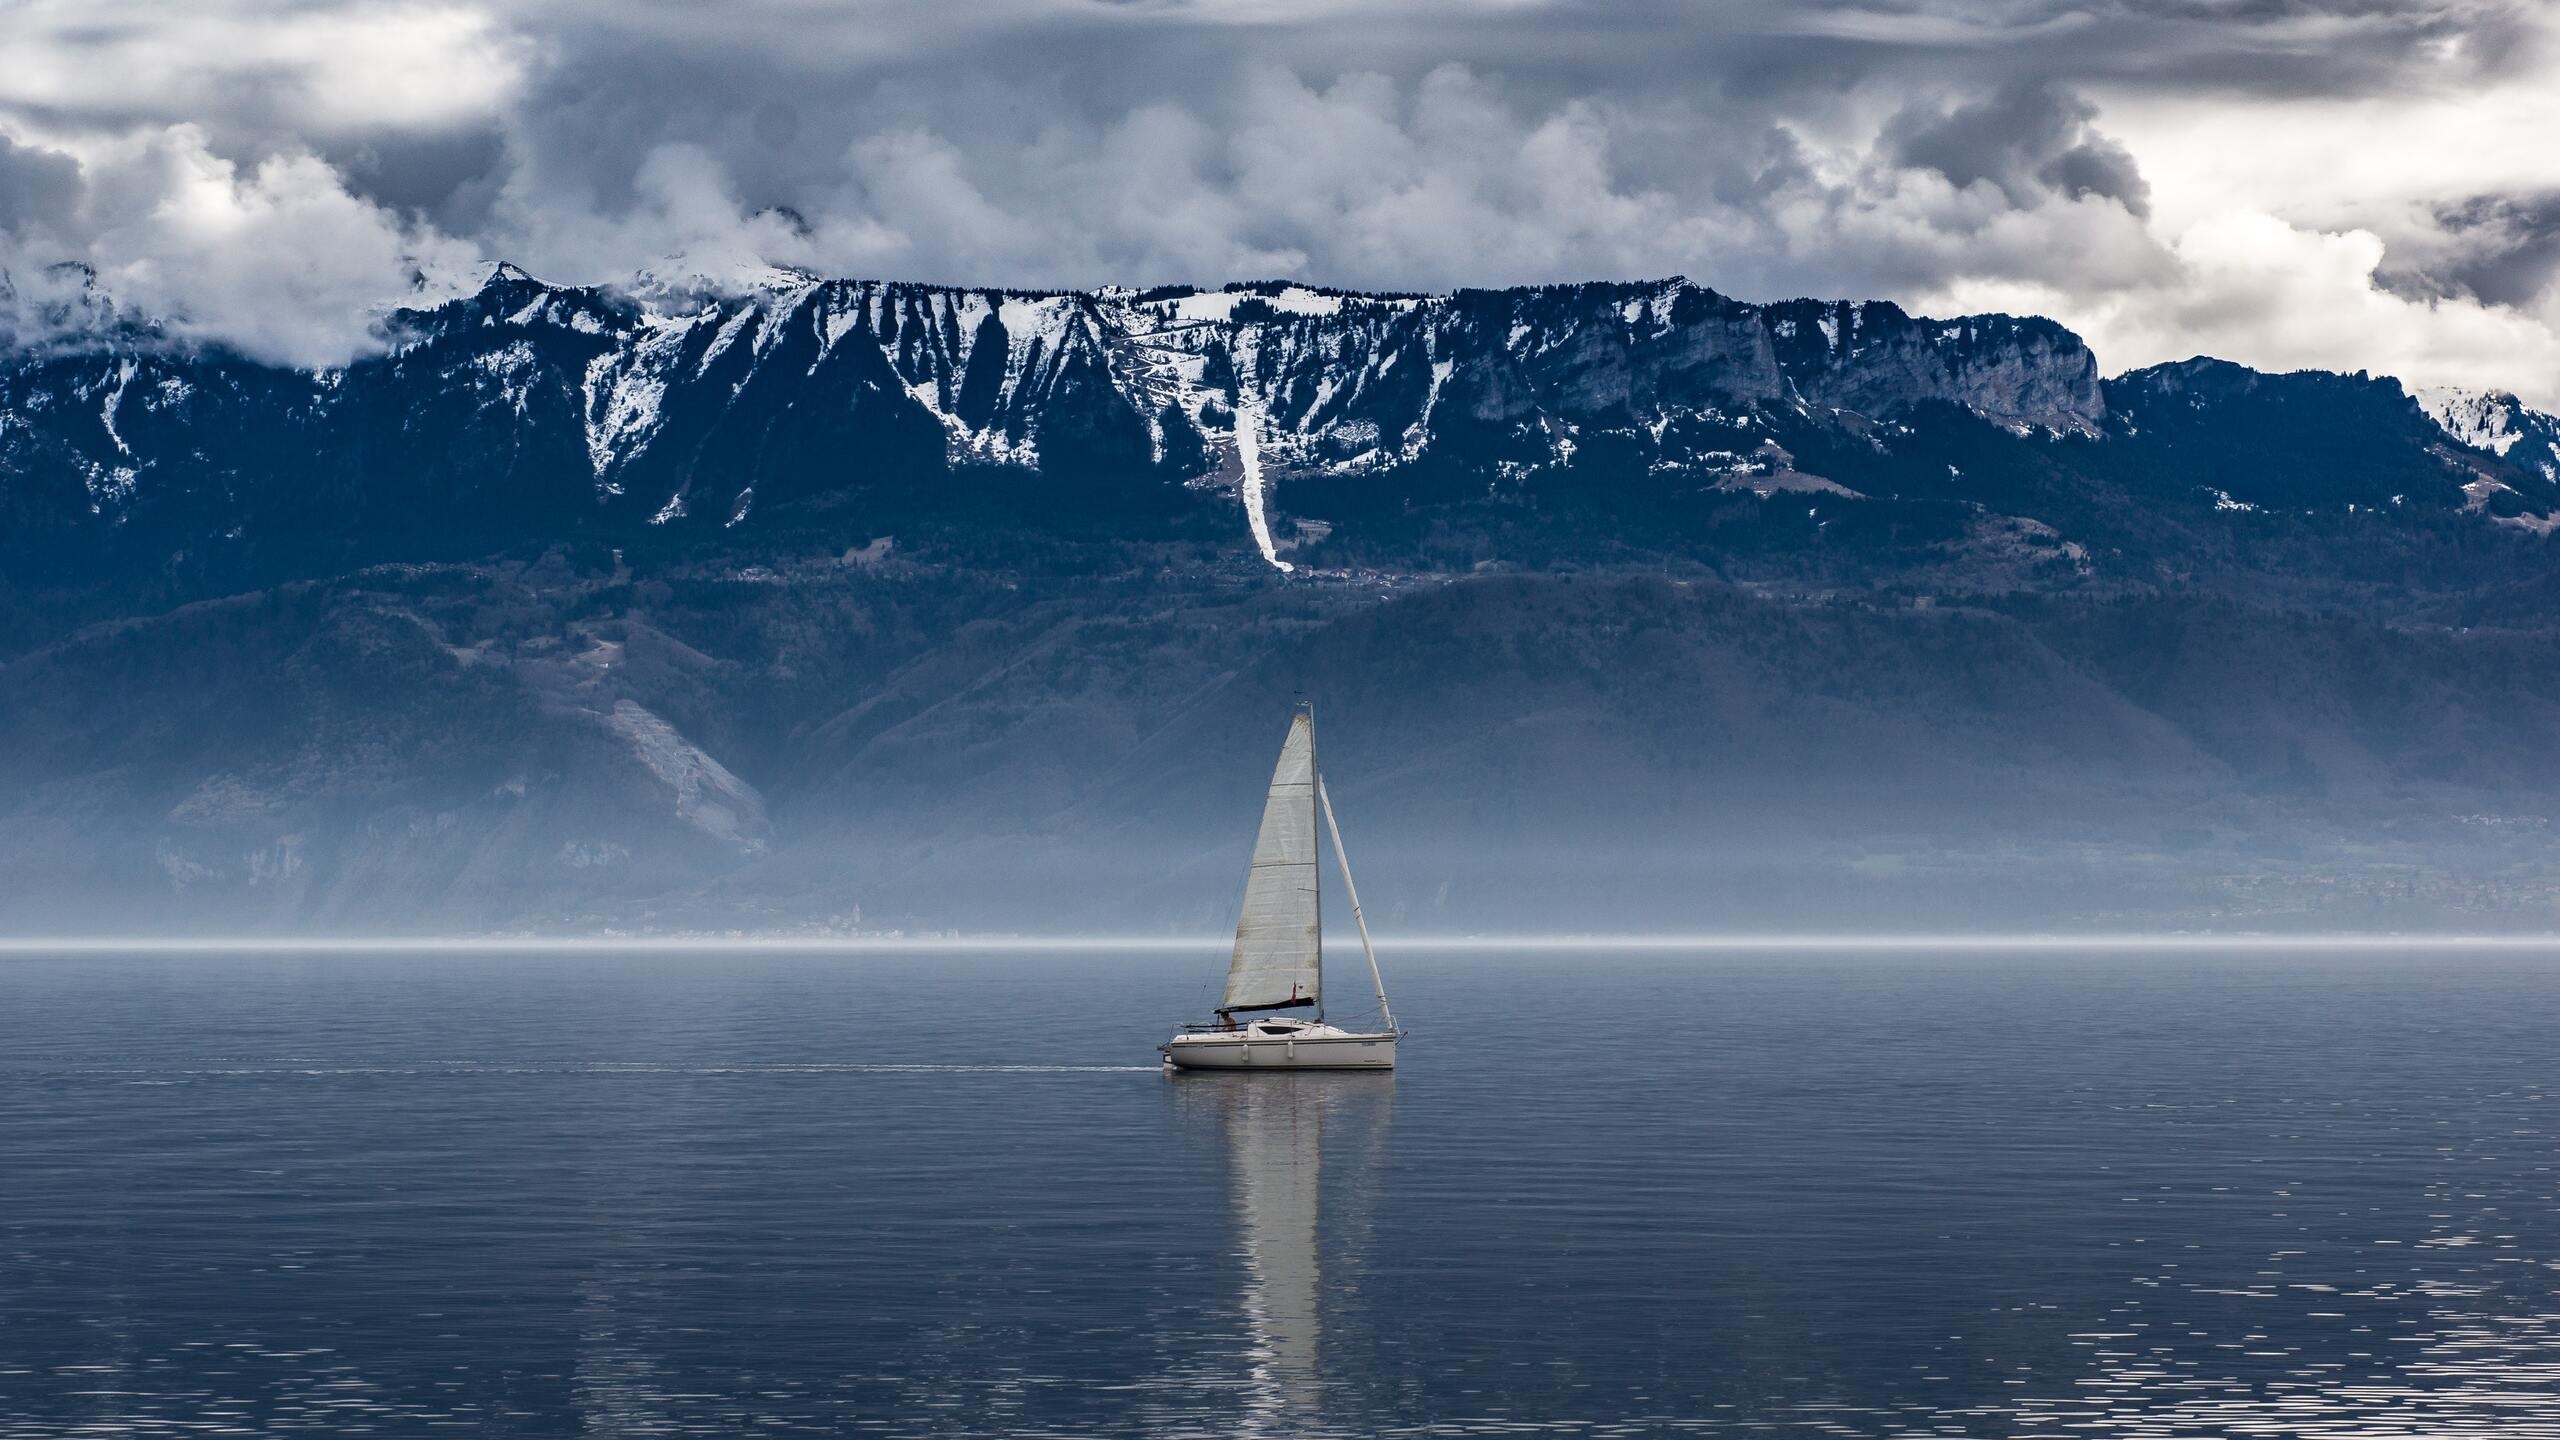 Sailboat seascape landscape, High resolution, Breathtaking views, Natural beauty, 2560x1440 HD Desktop